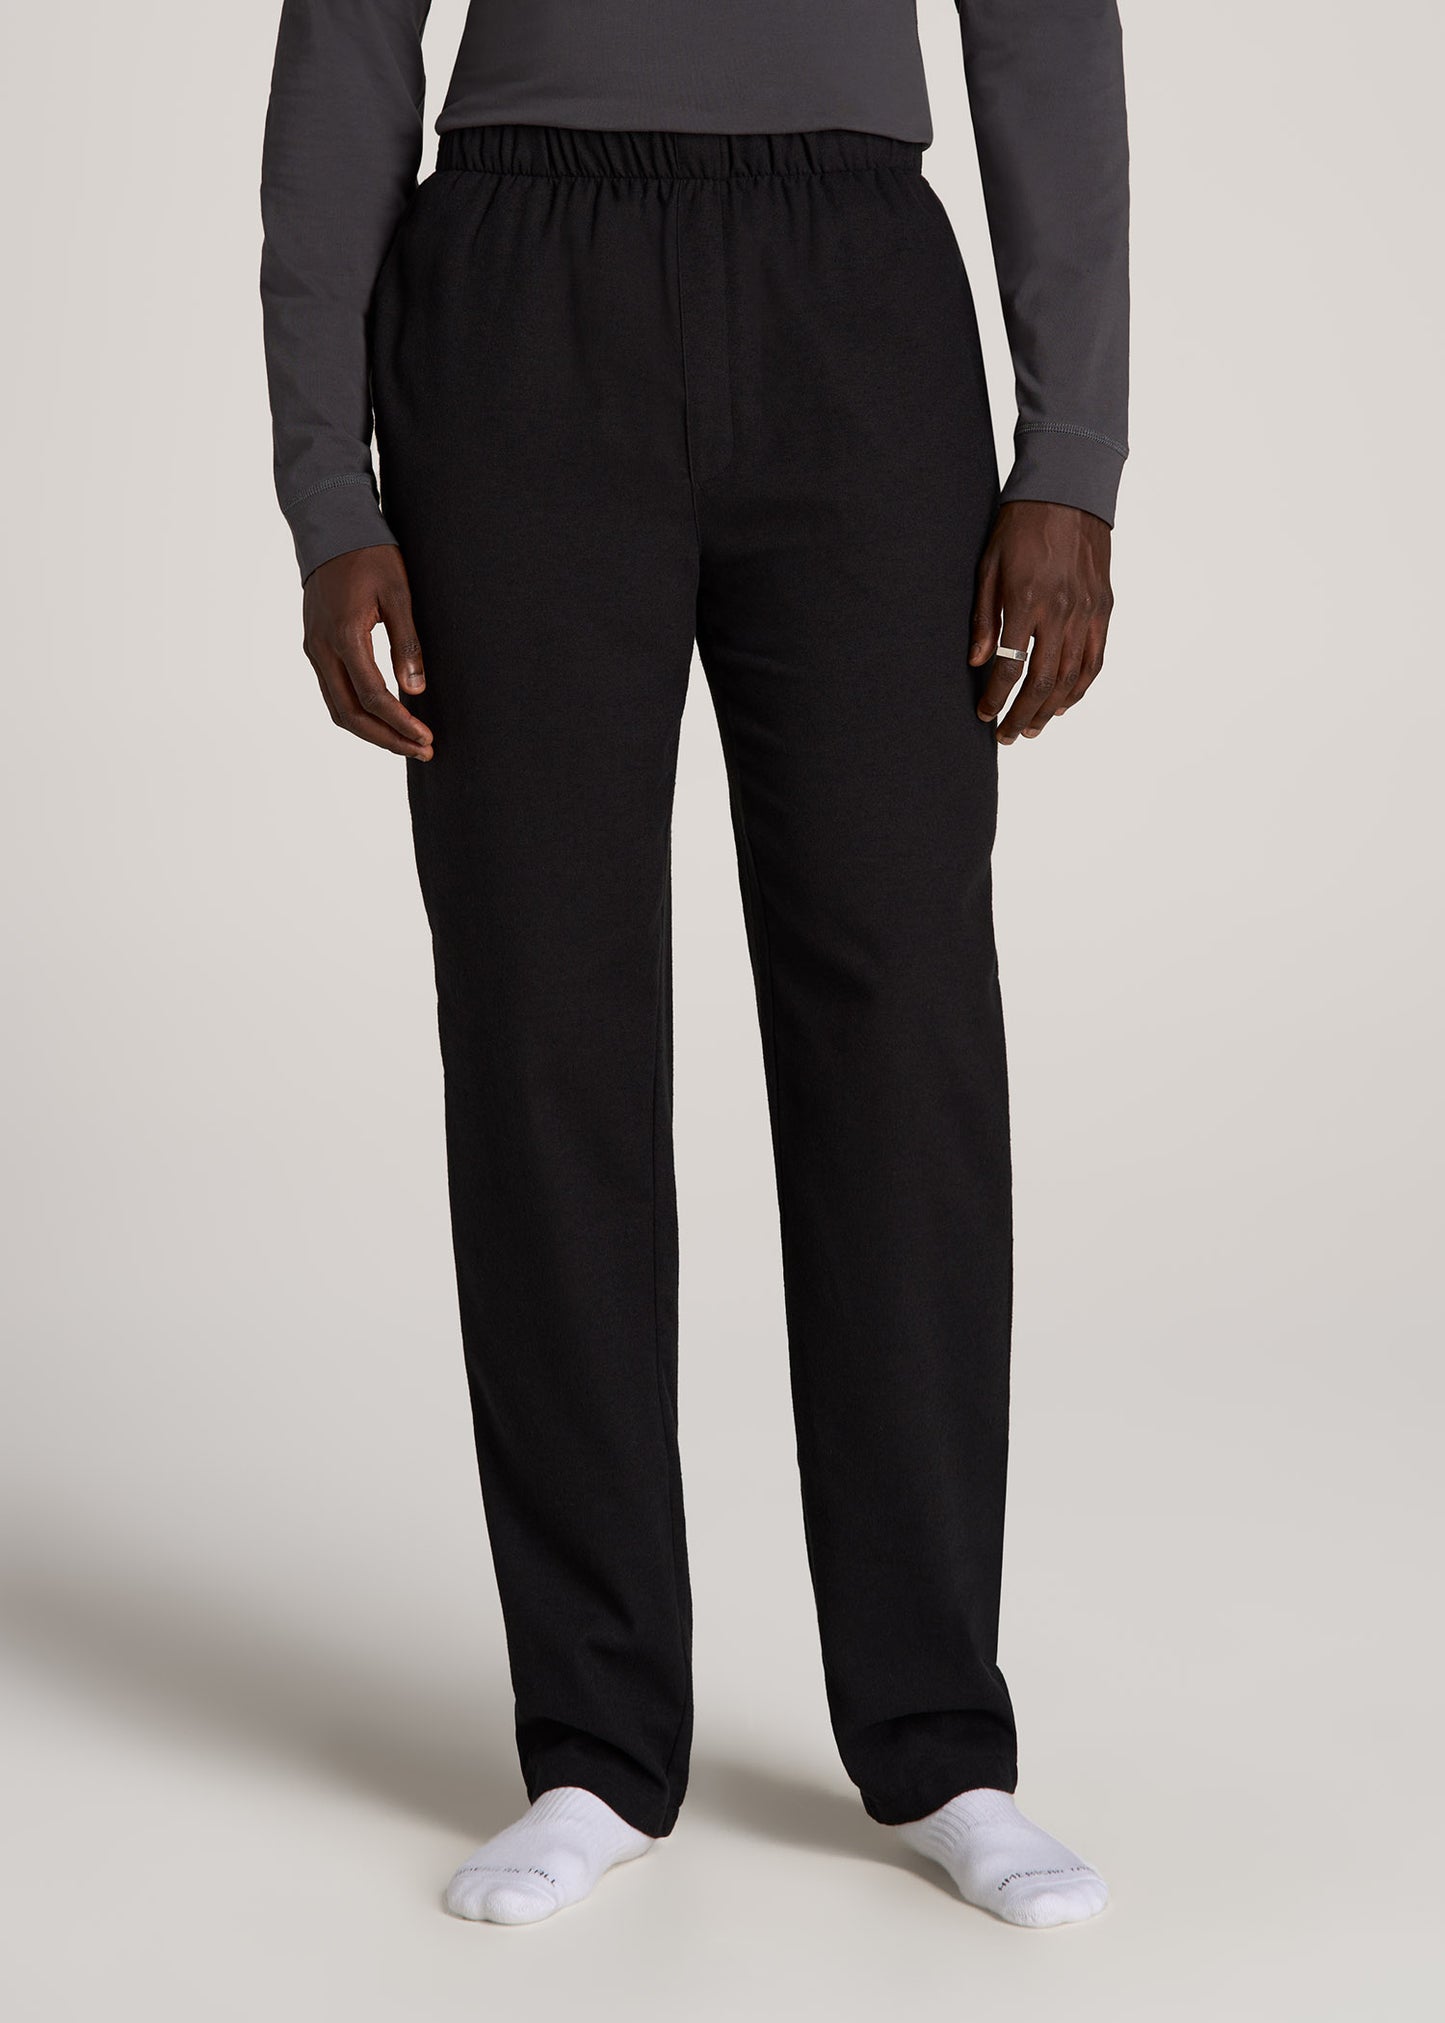 Regular Fit pyjama bottoms - Blue/Black checked - Men | H&M IN